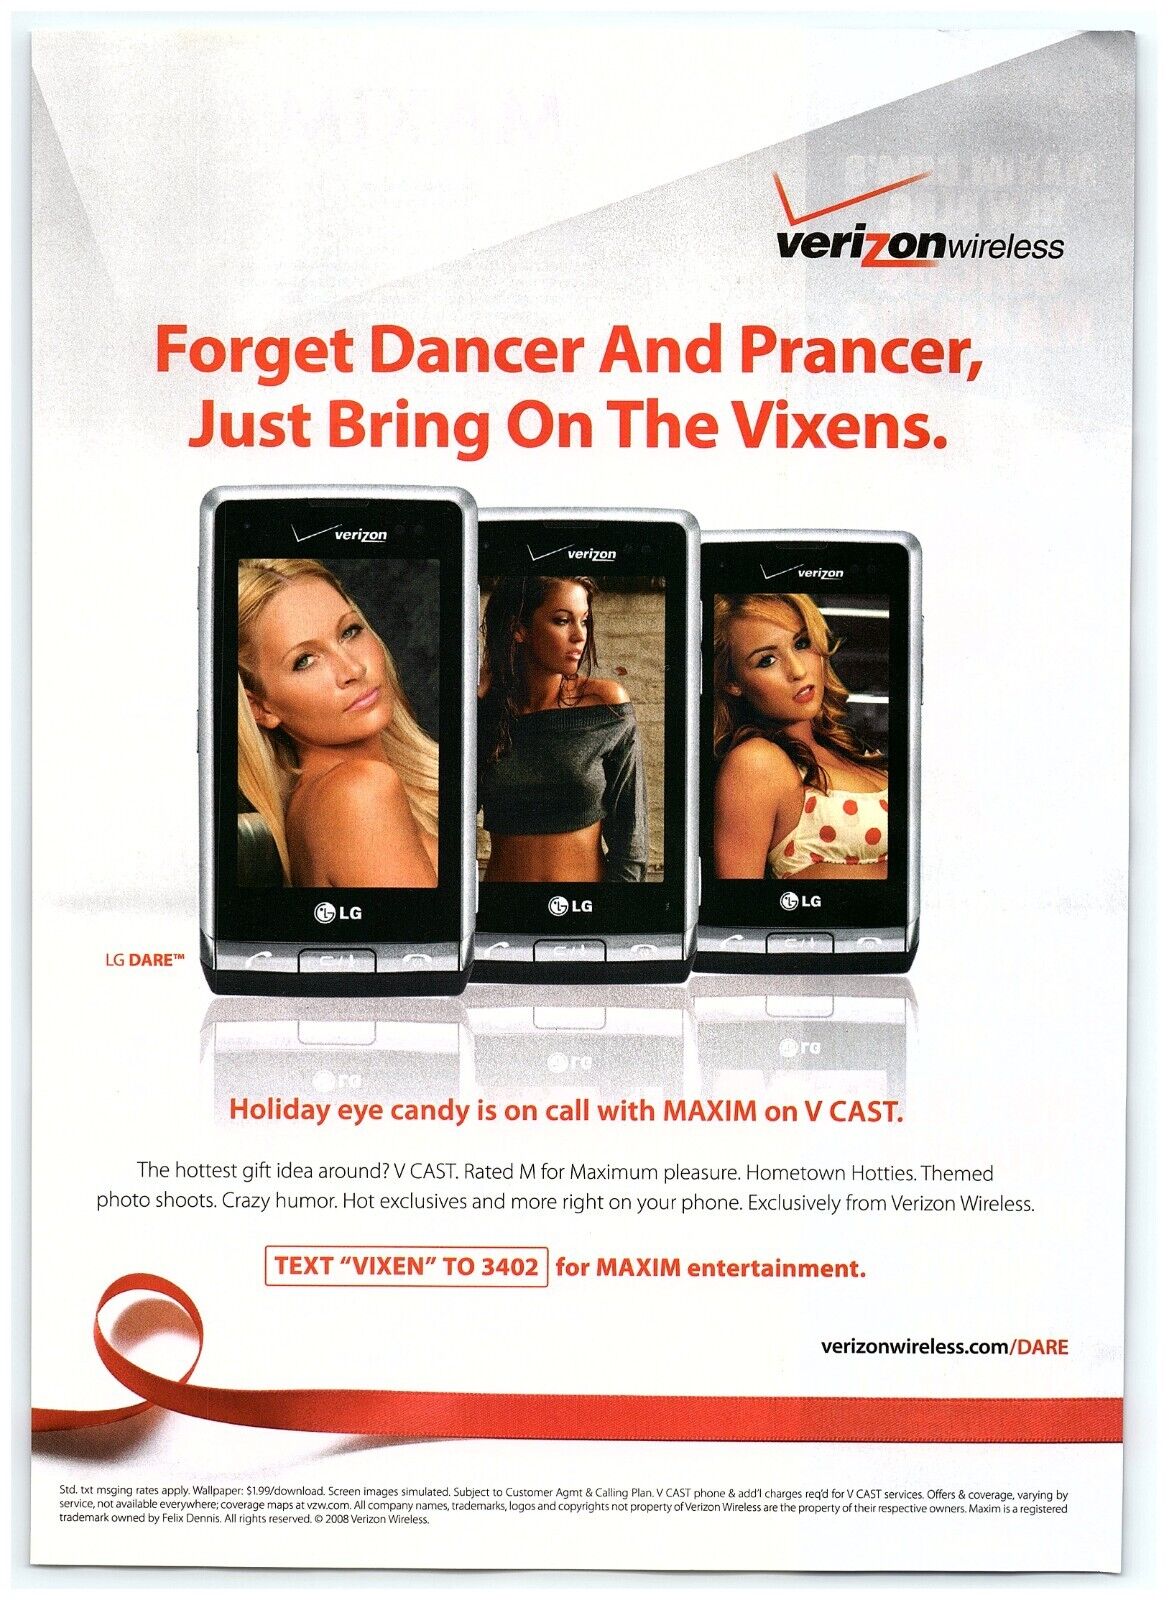 2008 Verizon Wireless Print Ad, LG Dare Phone Bring On The Vixens Dancer Prancer